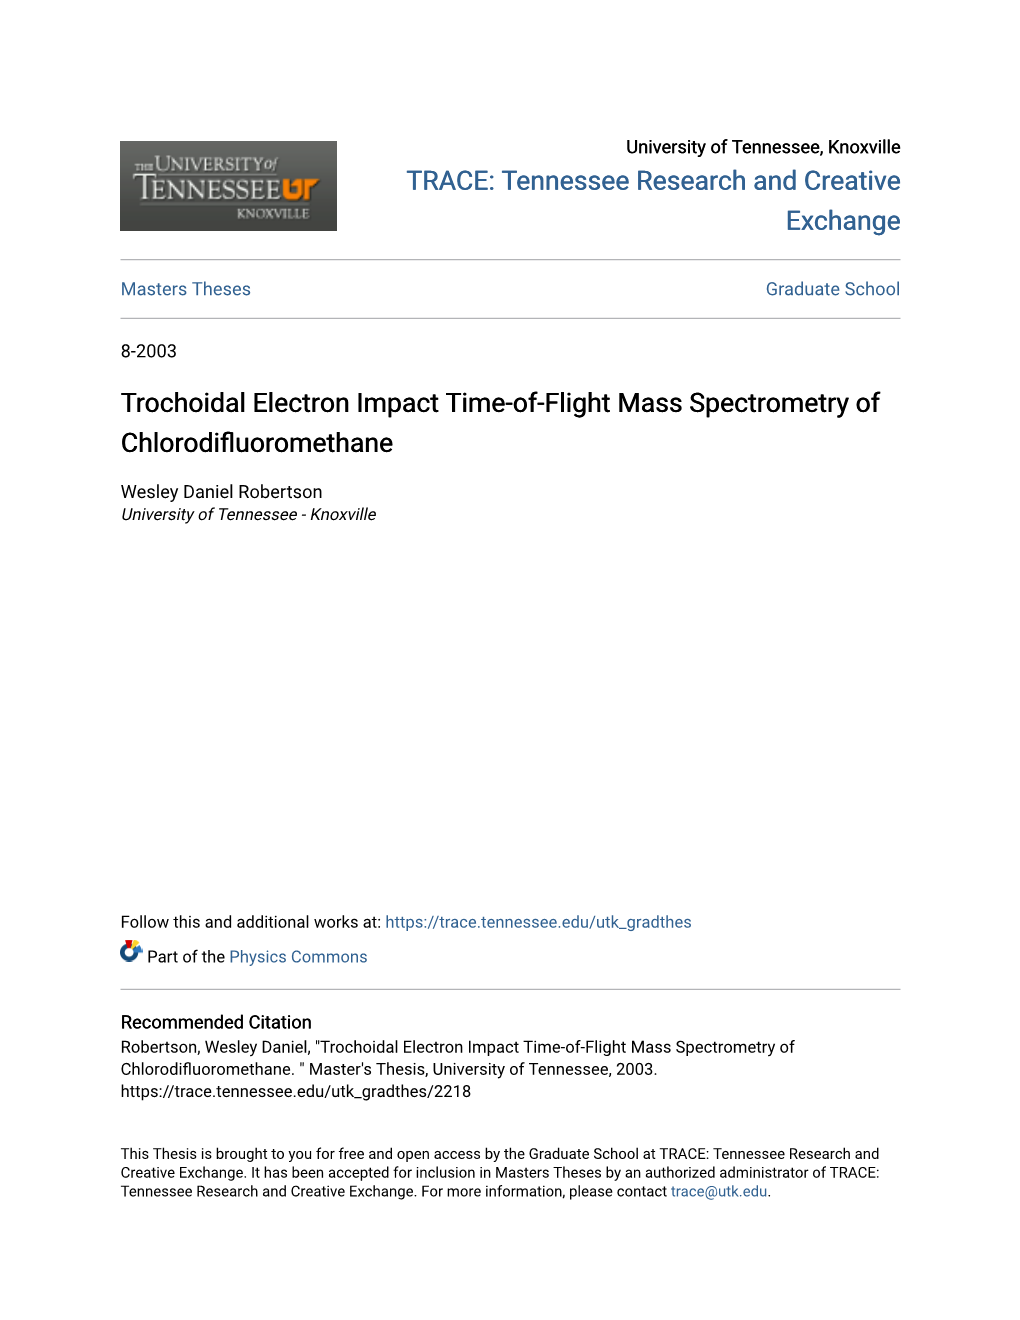 Trochoidal Electron Impact Time-Of-Flight Mass Spectrometry of Chlorodifluoromethane